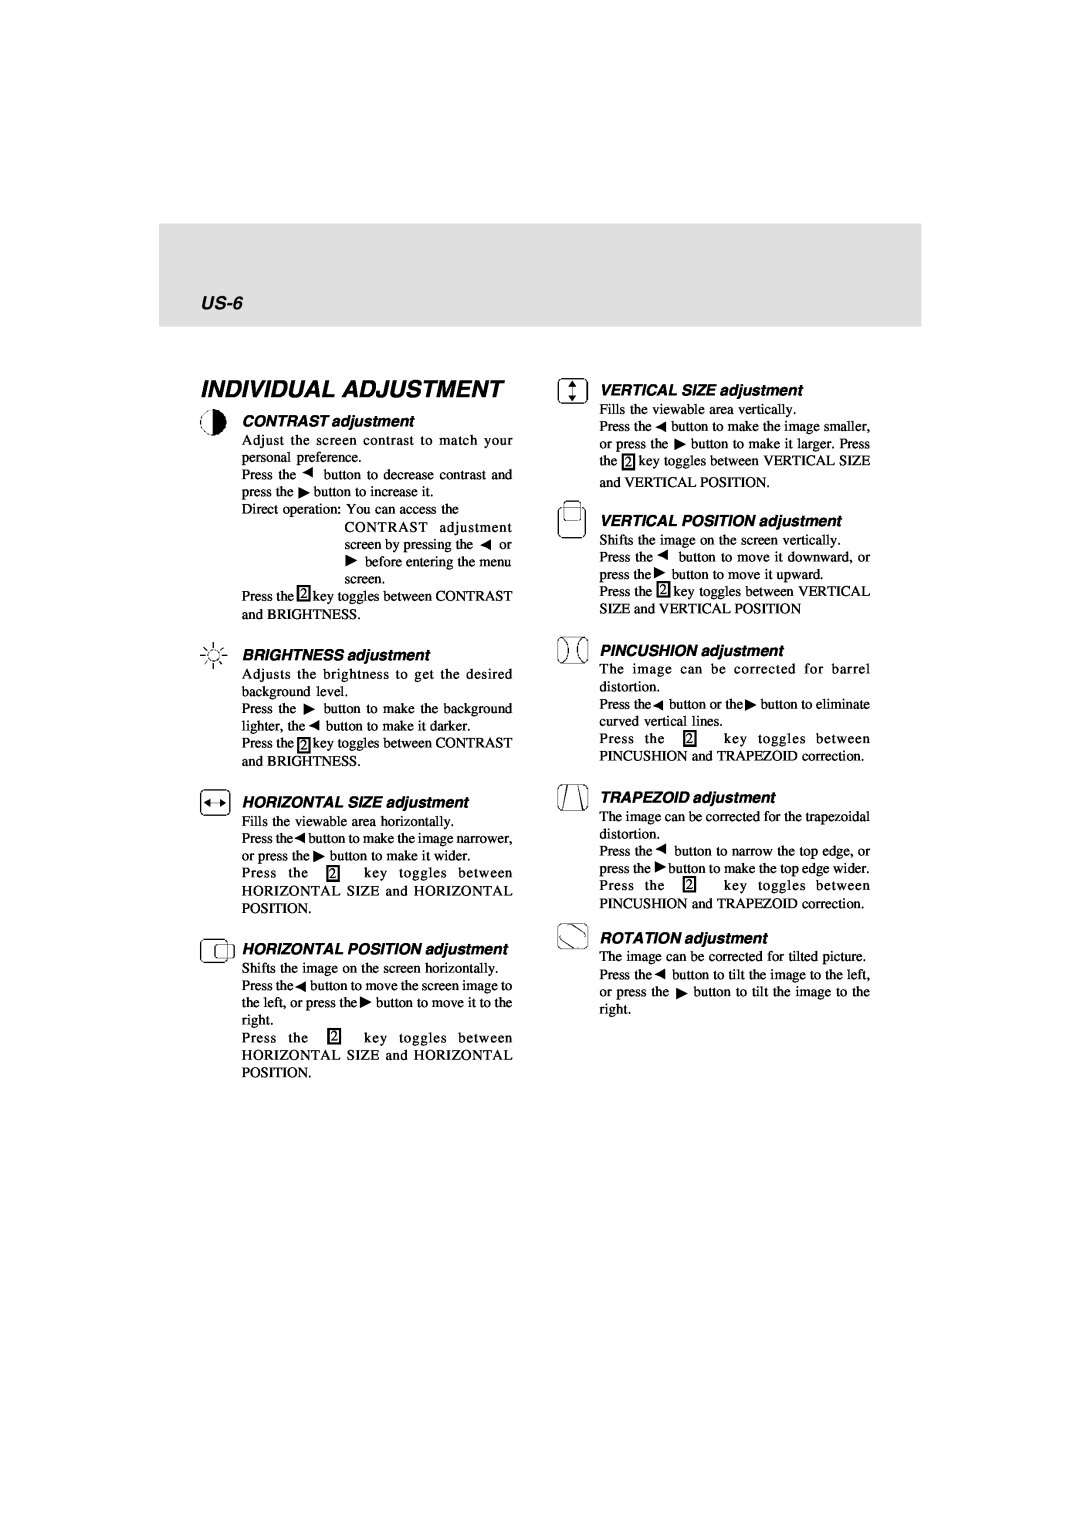 Lenovo E74 manual Individual Adjustment, US-6, CONTRAST adjustment, BRIGHTNESS adjustment, HORIZONTAL SIZE adjustment 